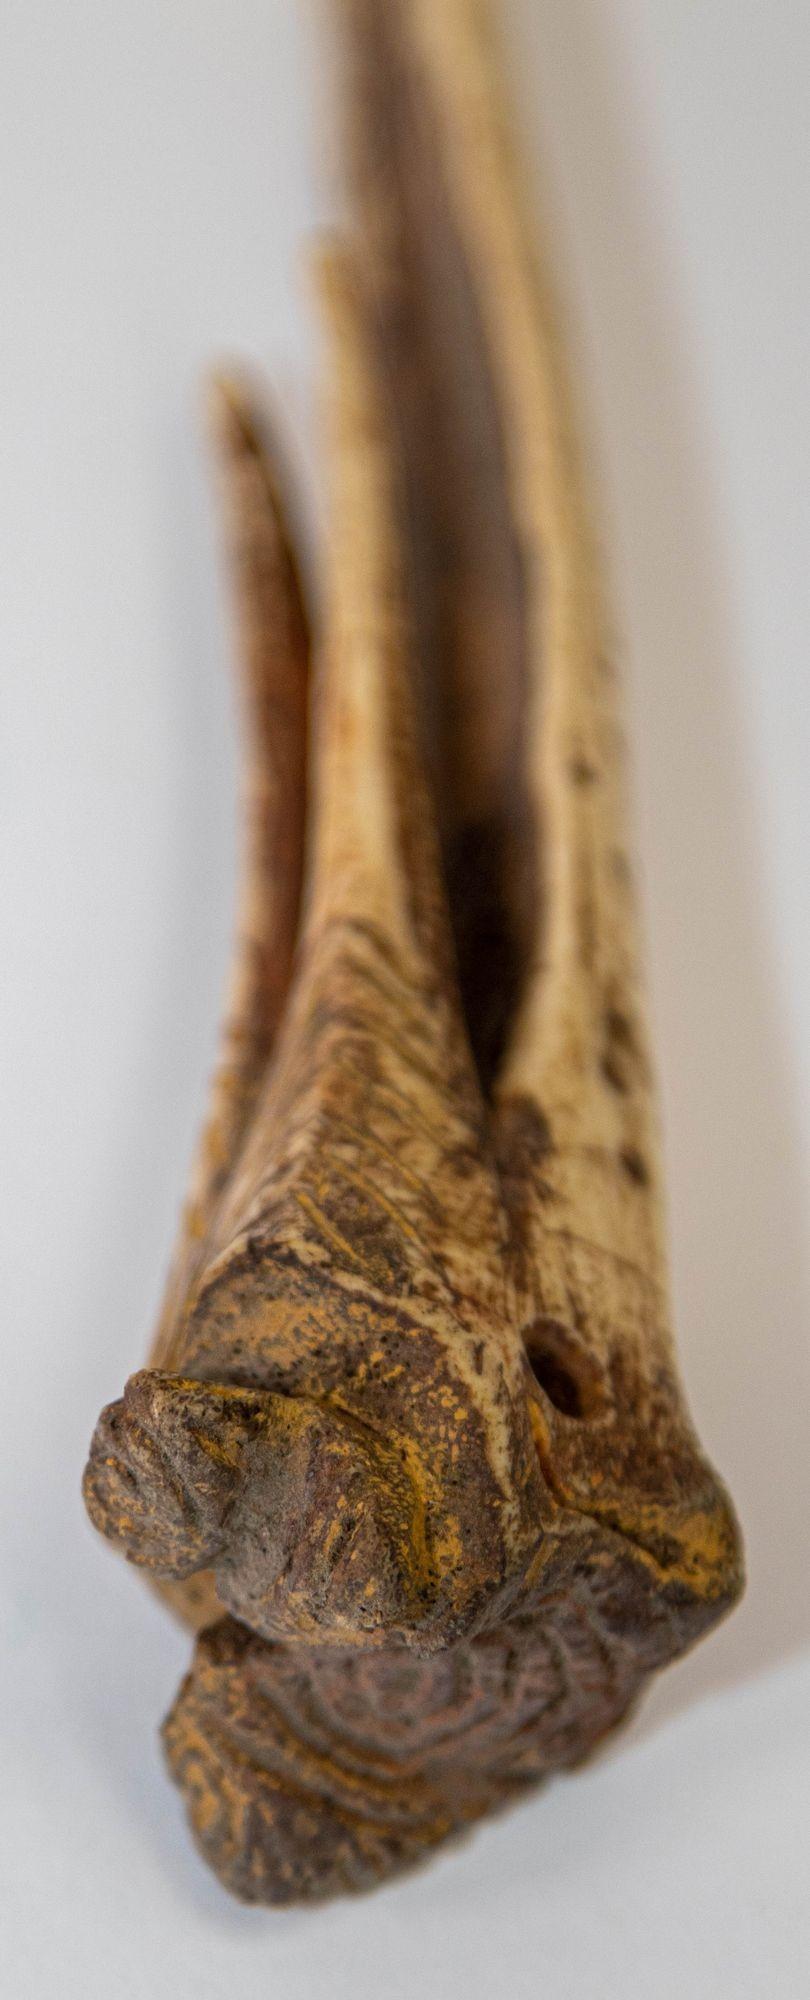 Antique Ethnic Artifact Sepik River Cassowary Bone from Papua New Guinea For Sale 4